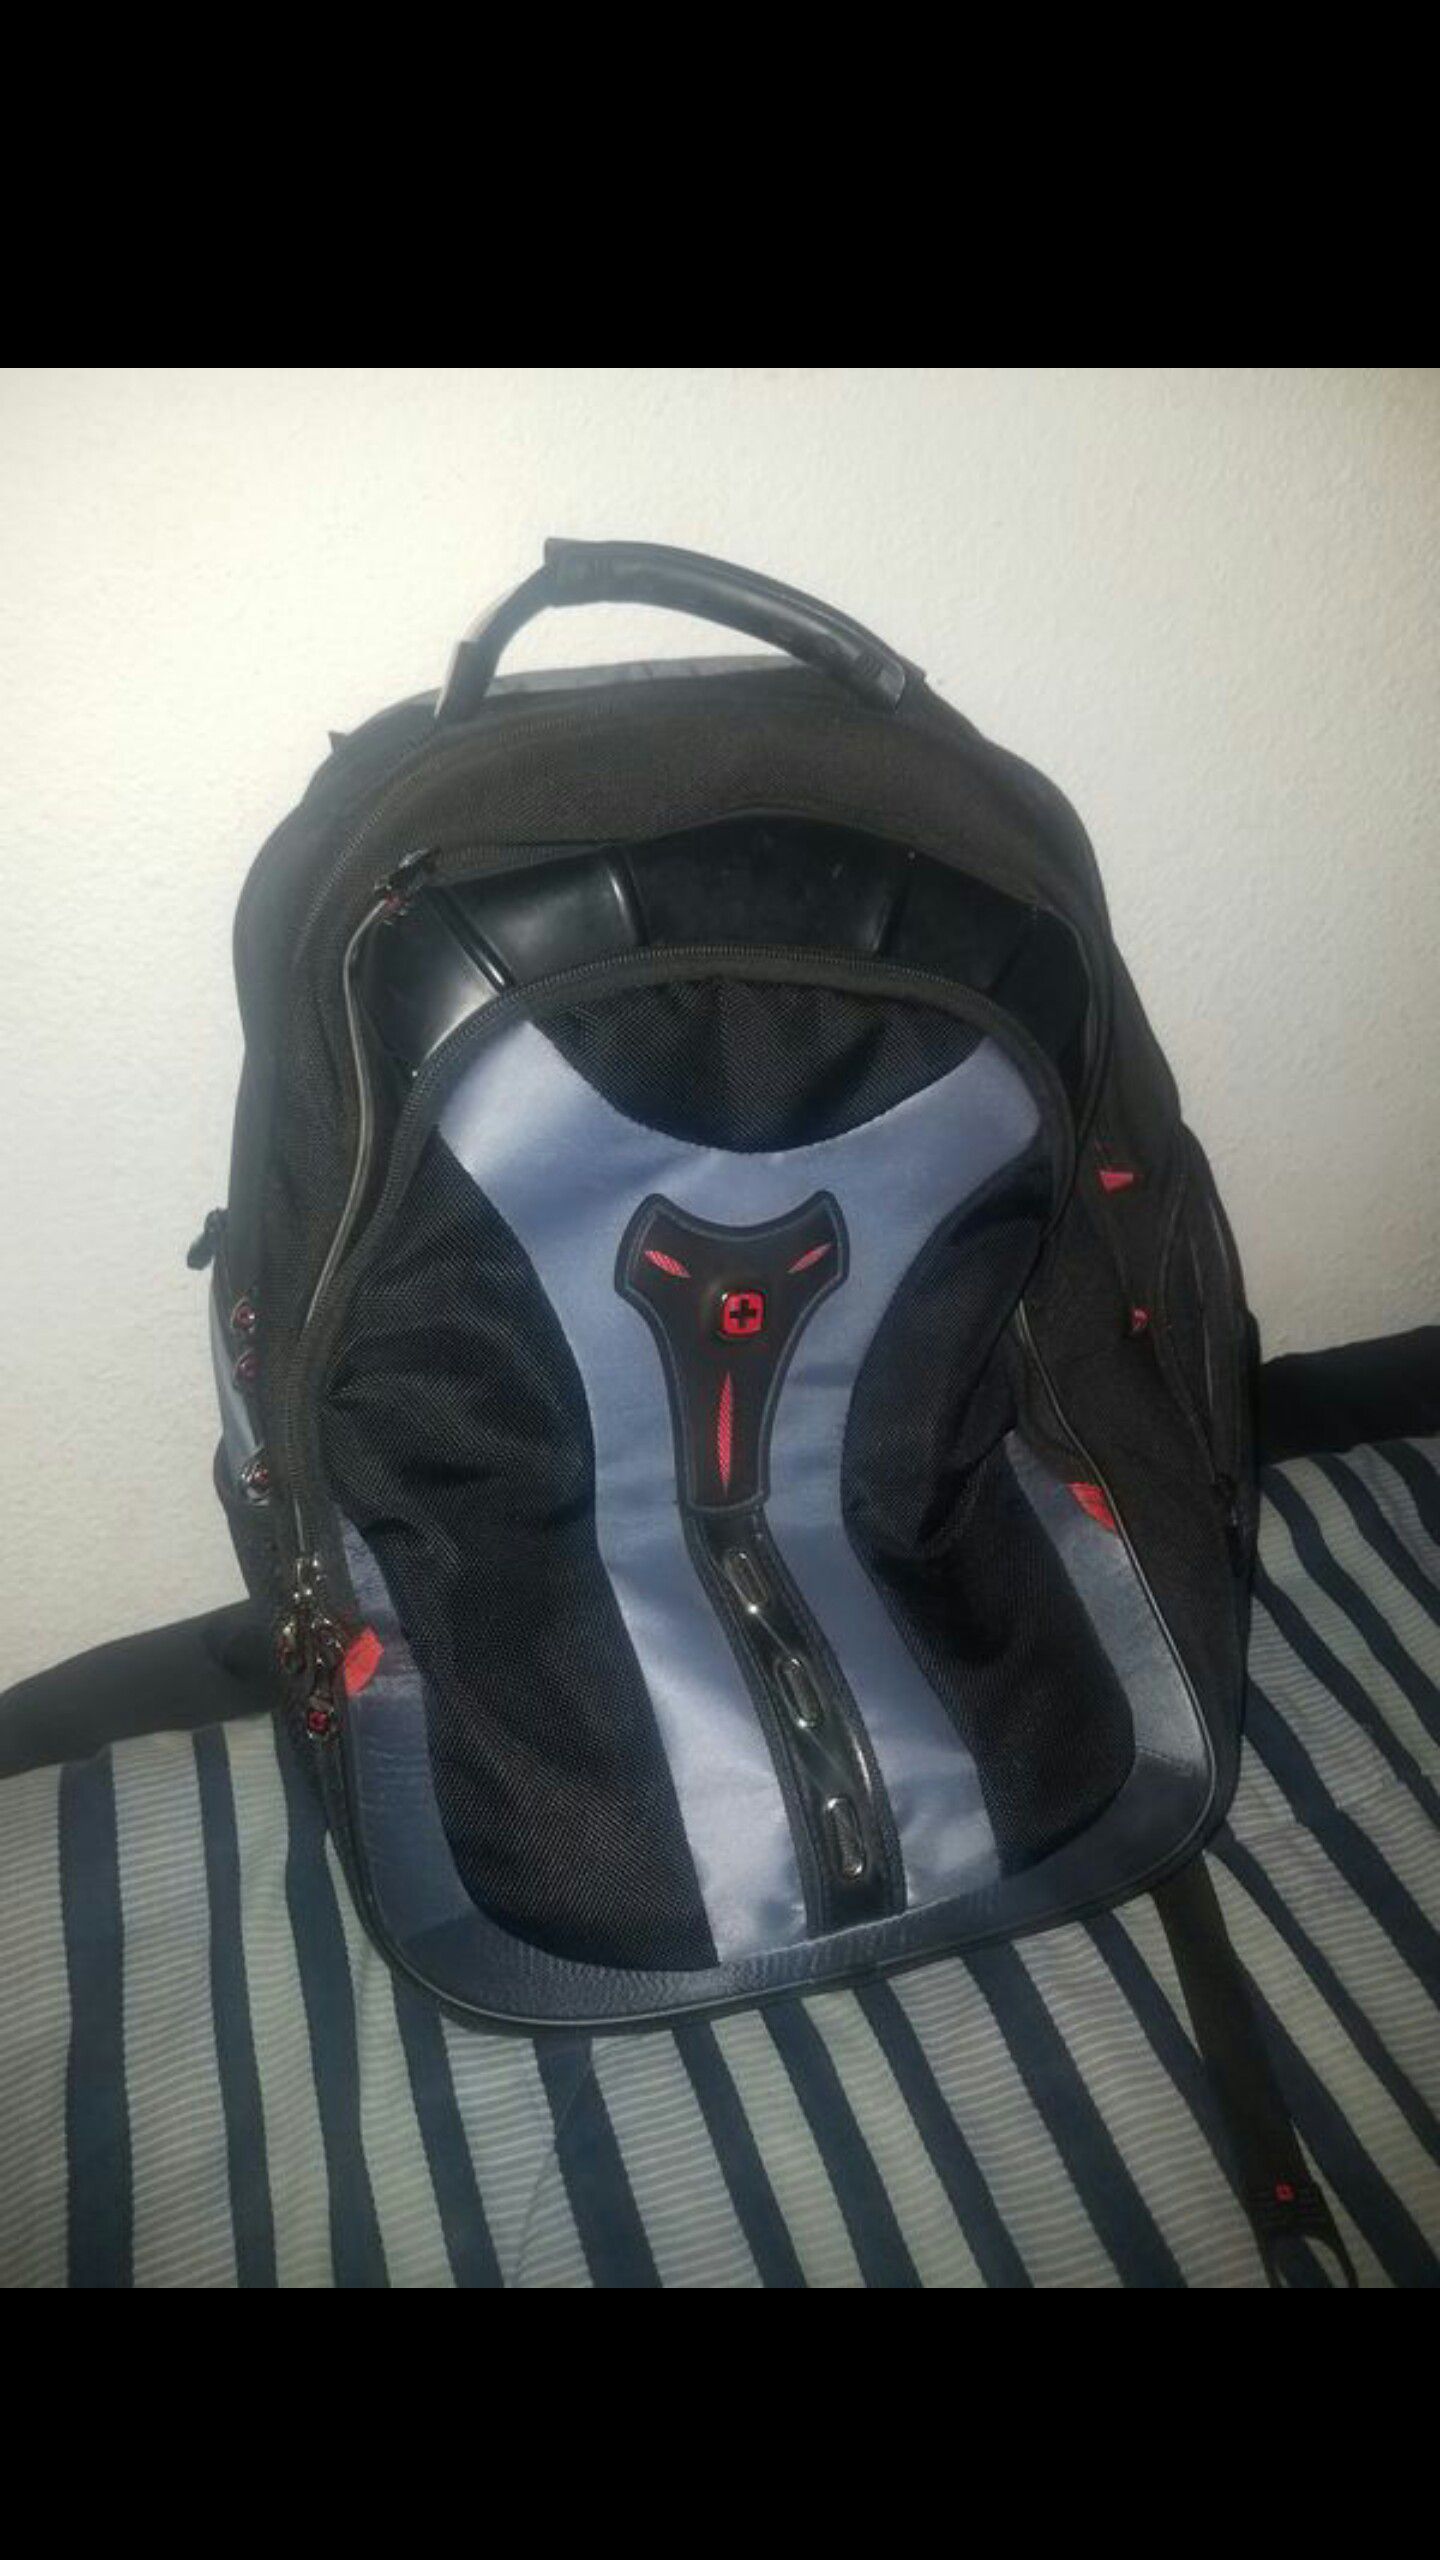 Brand new original Swiss army backpack